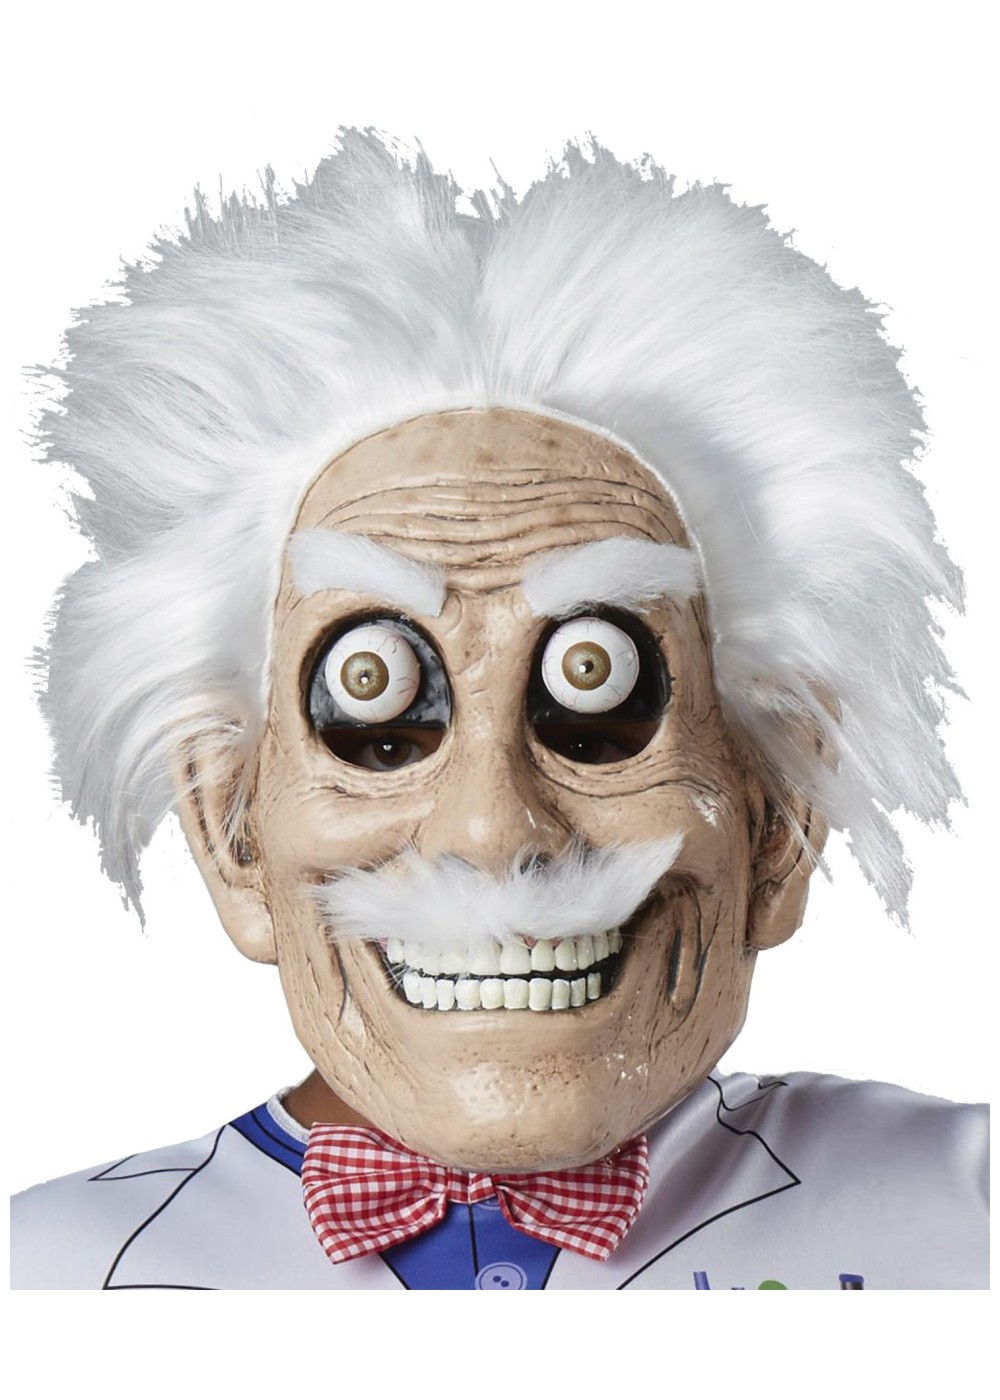 Crazy Mad Scientist Mask